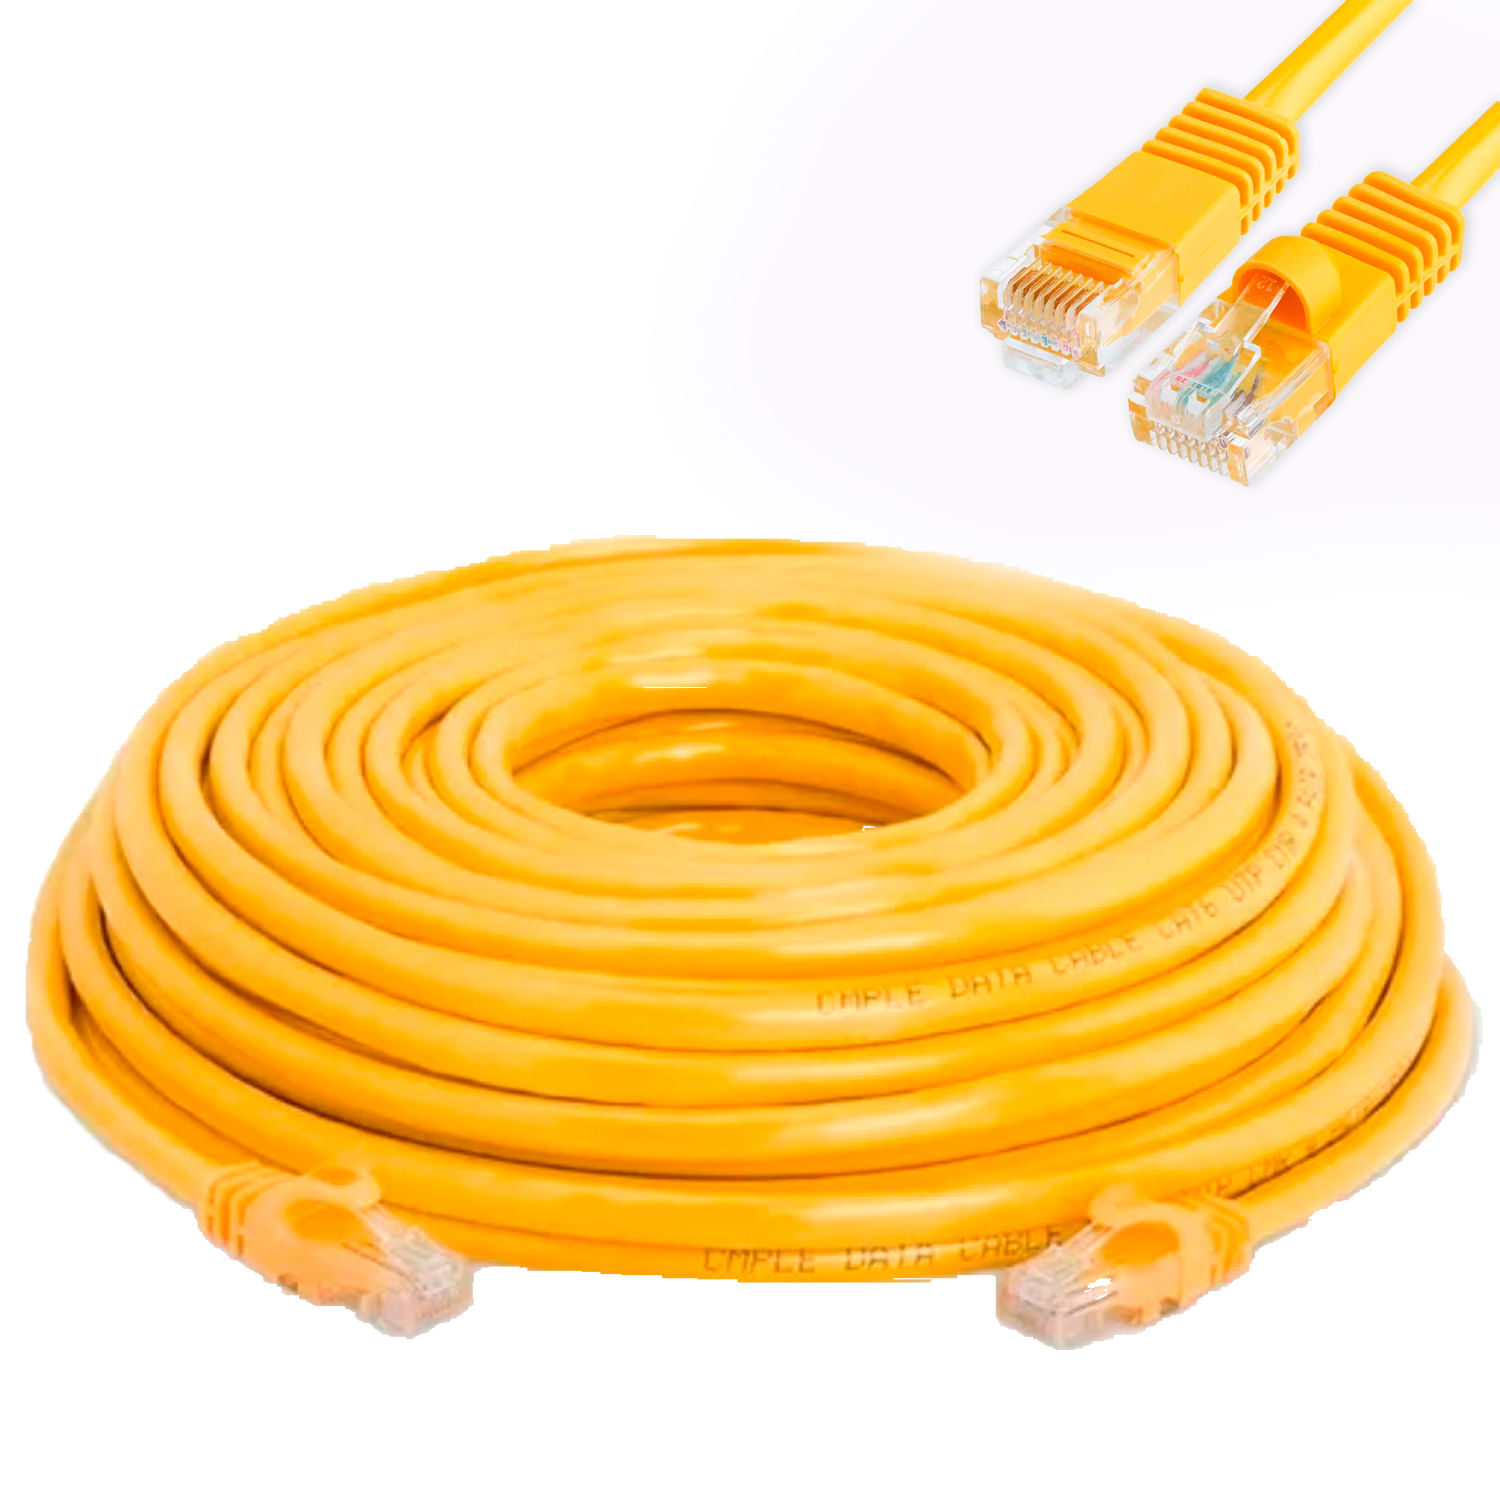 Cable De Red Internet Categoría 6E15 Metros Ethernet Alta Velocidad